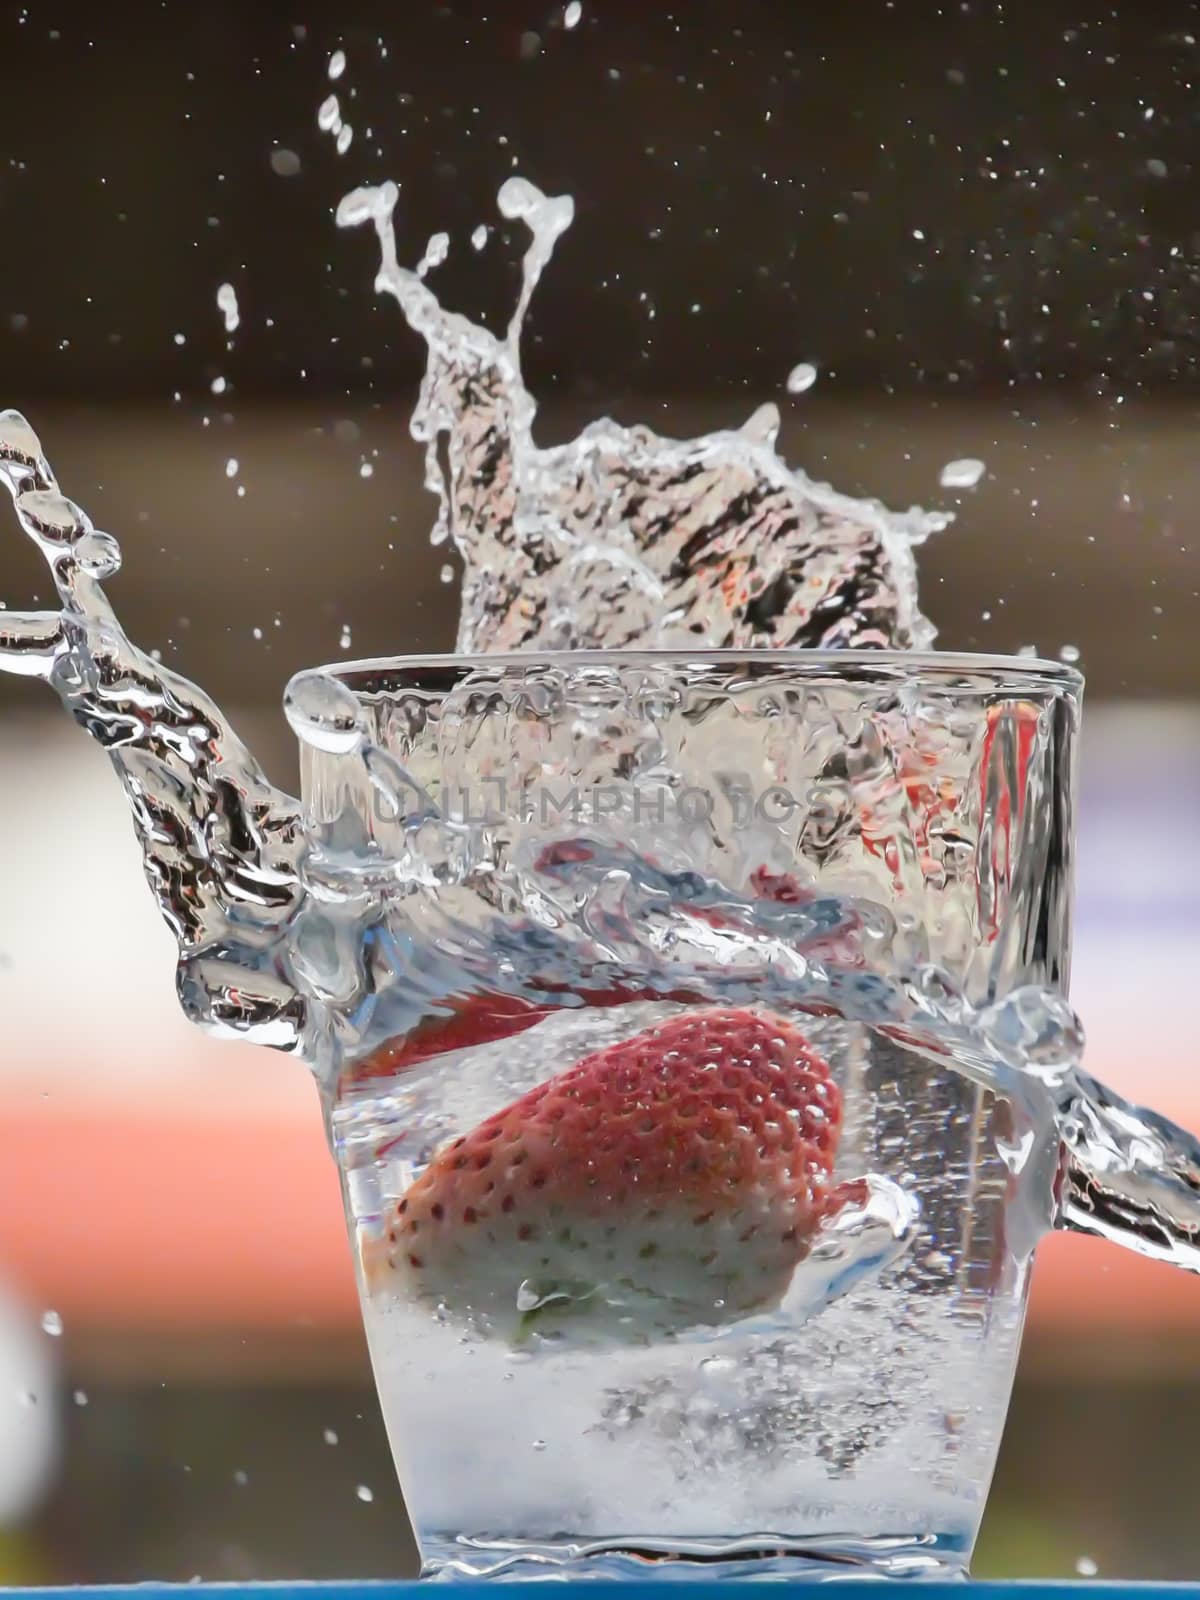 Strawberry Water splash in glass by nikky1972